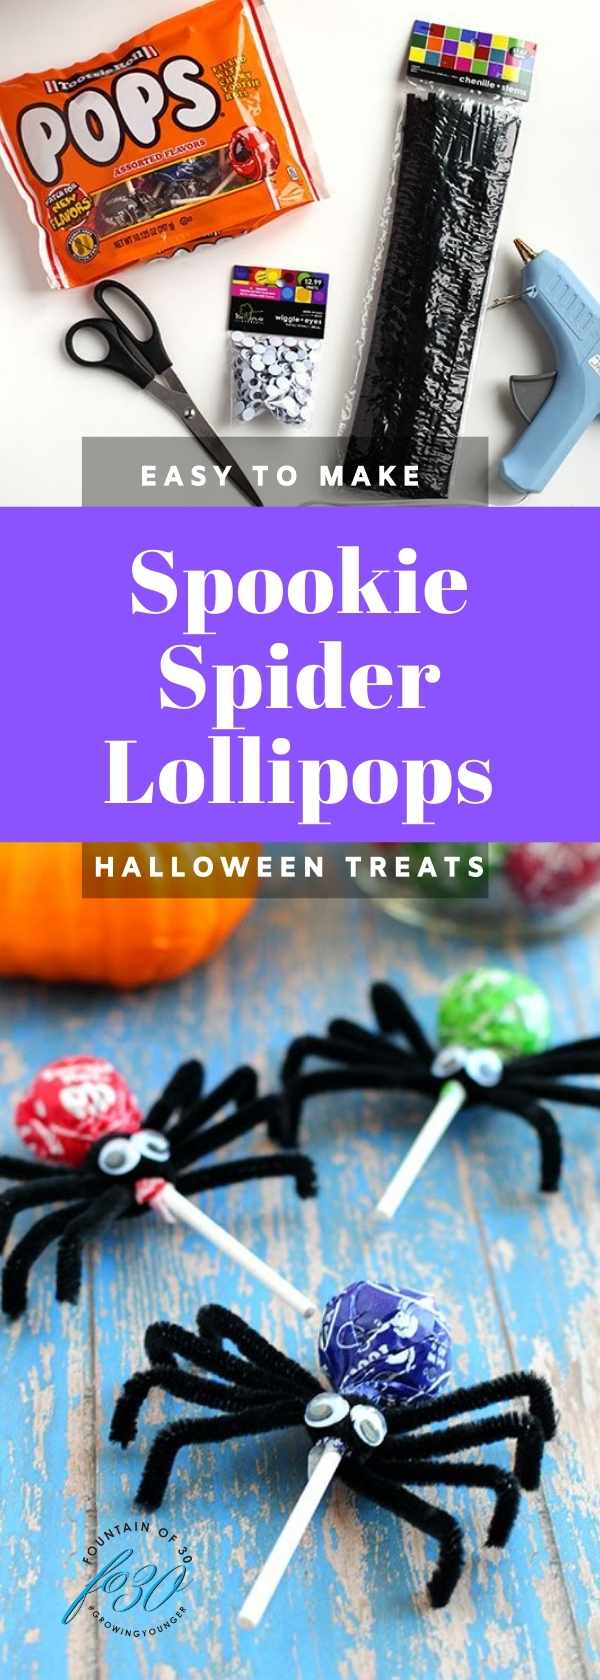 how to make spider lolipops halloween treats fountainof30